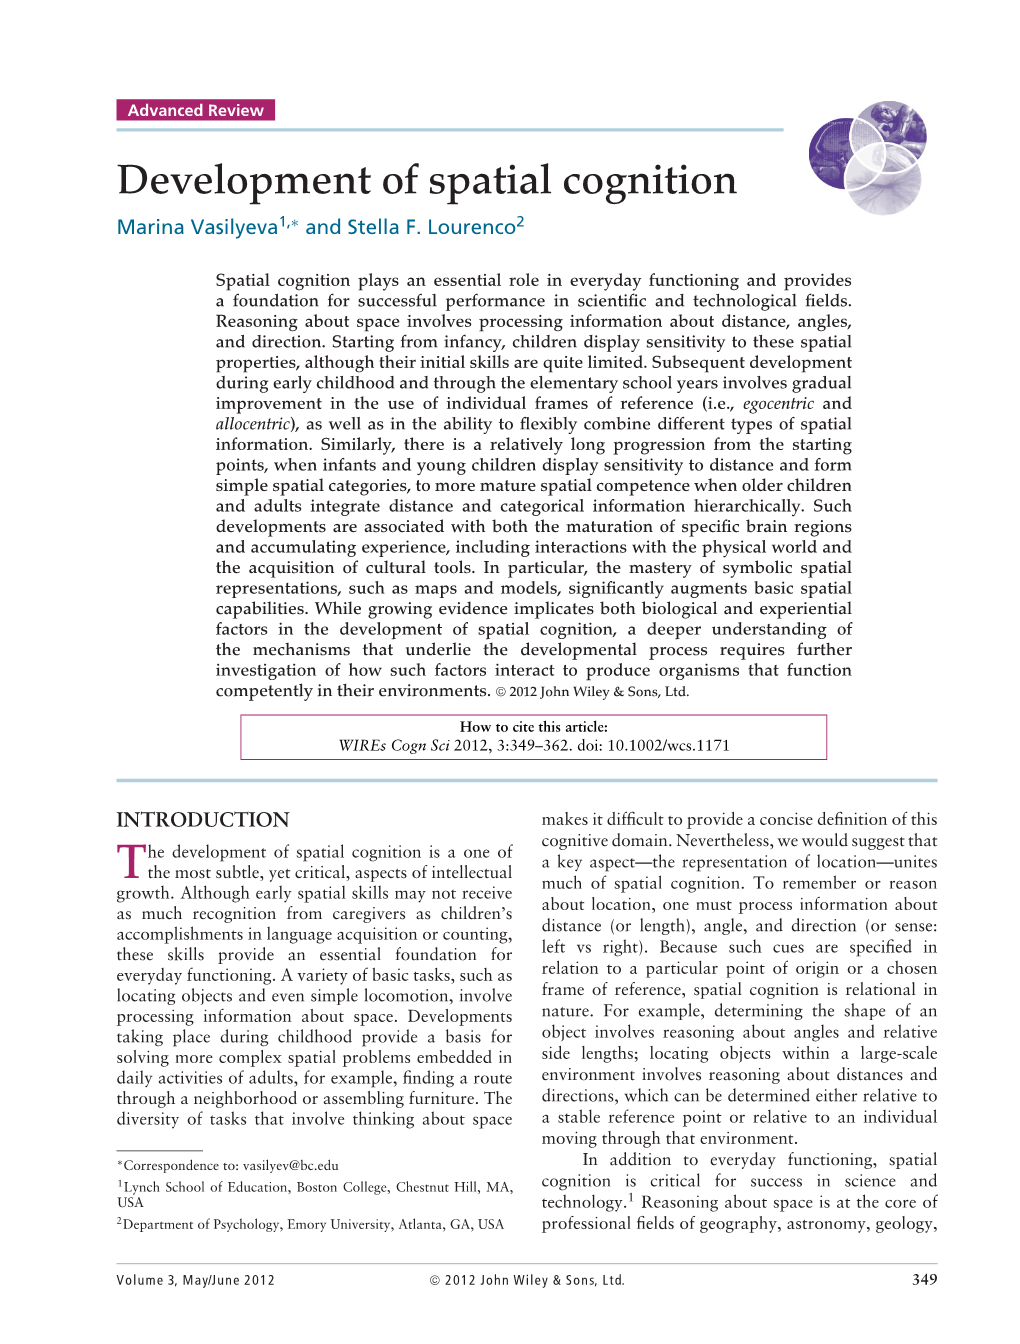 Development of Spatial Cognition Marina Vasilyeva1,∗ and Stella F